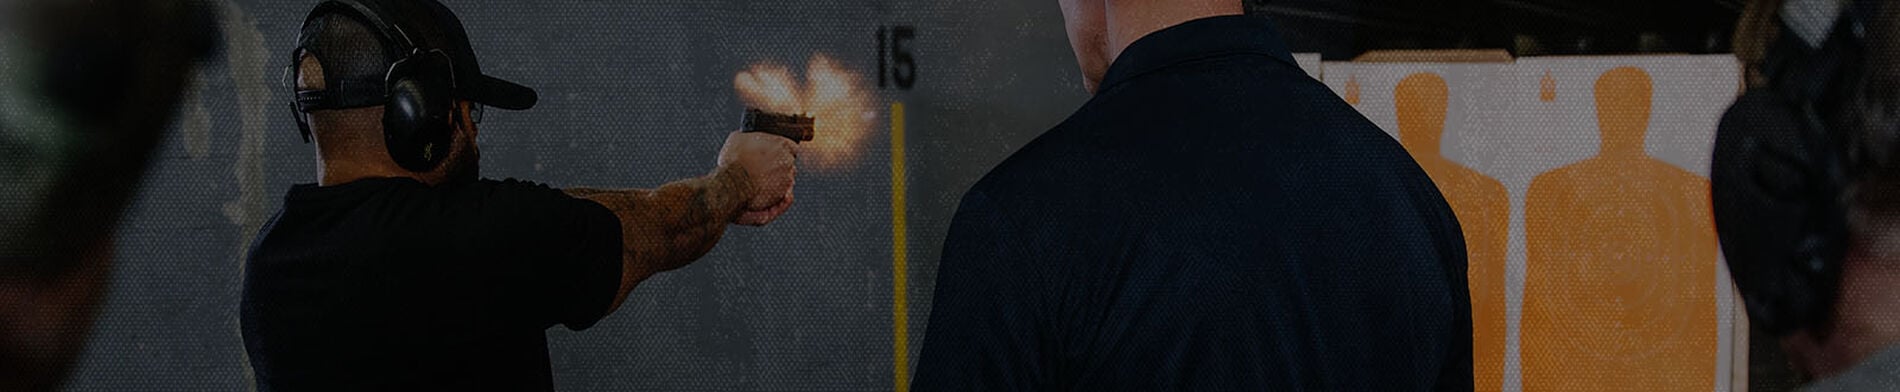 guy shooting a handgun at an indoor range